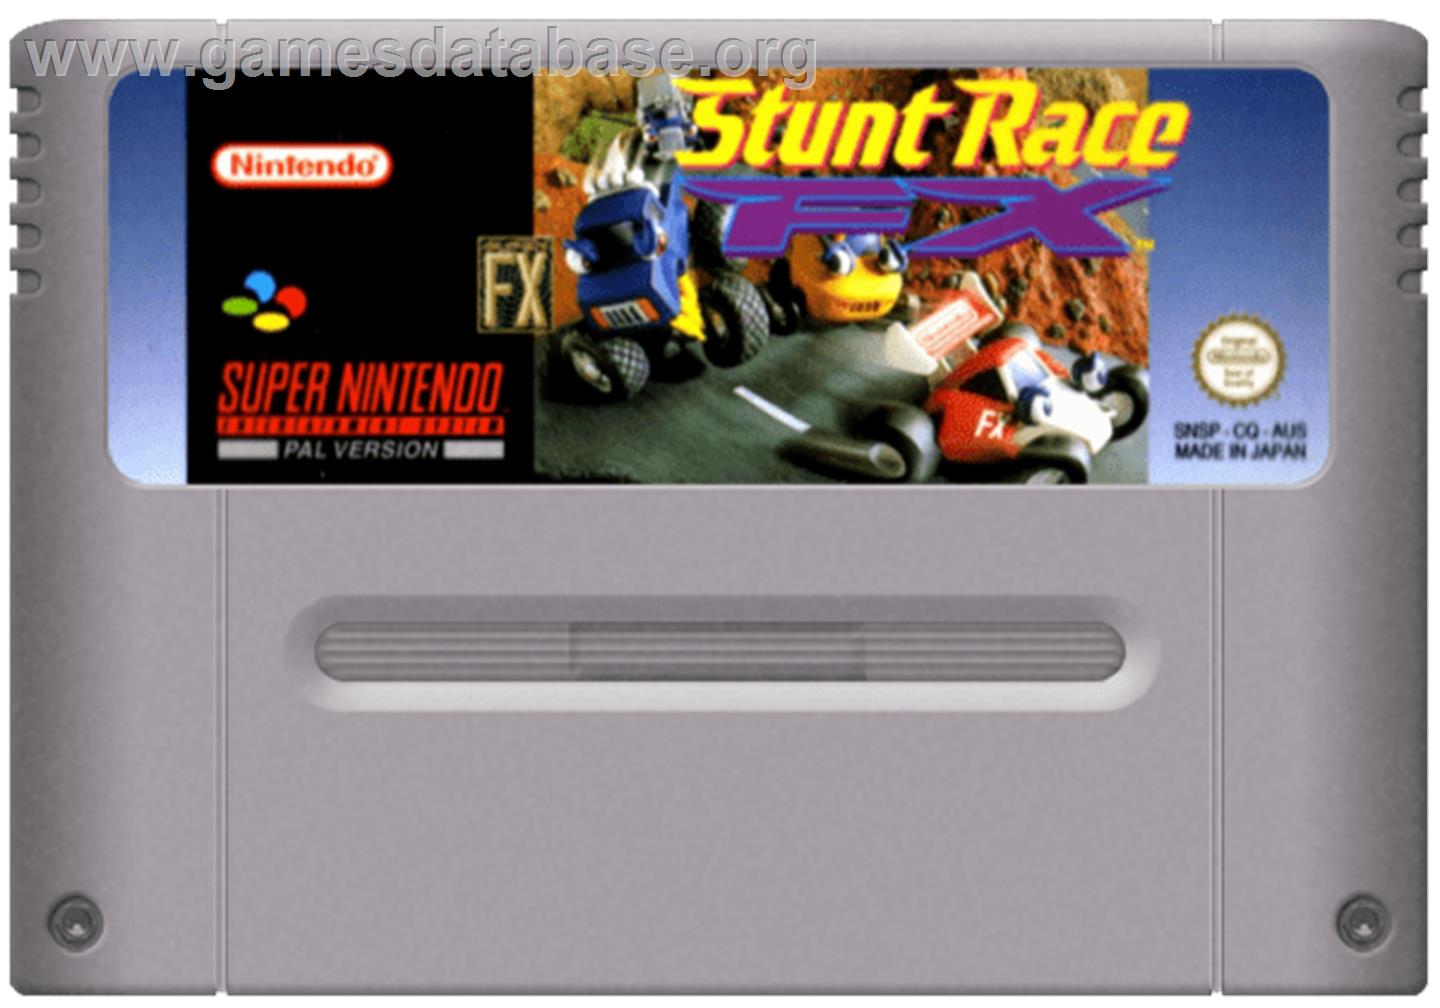 Stunt Race FX - Nintendo SNES - Artwork - Cartridge